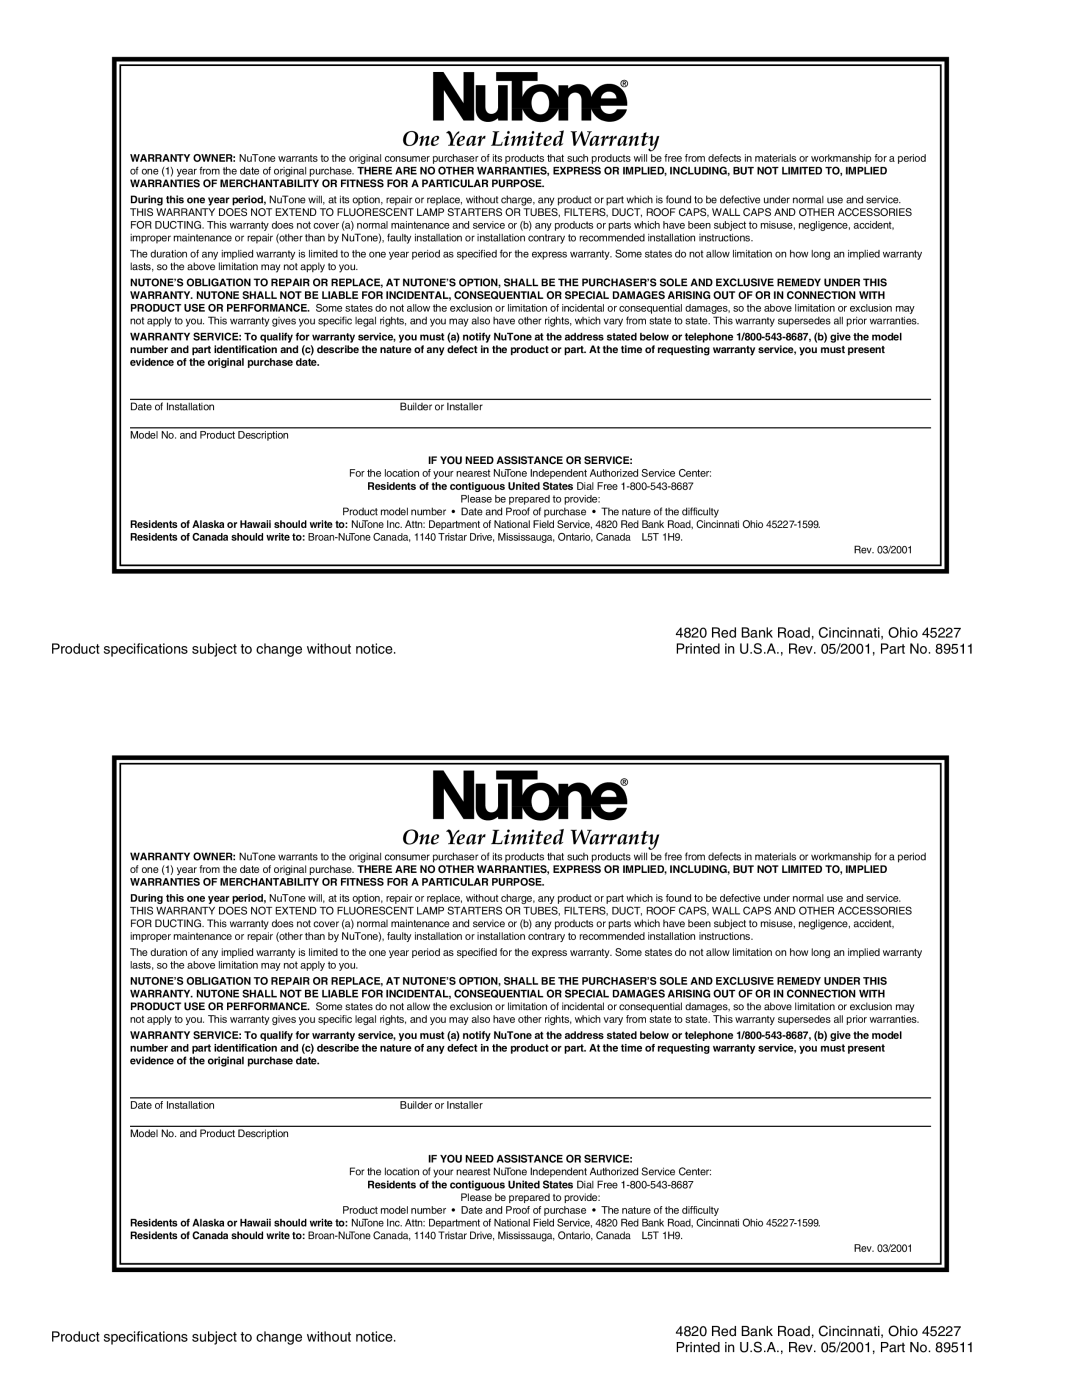 NuTone VS-65 installation instructions One Year Limited Warranty, Red Bank Road, Cincinnati, Ohio 